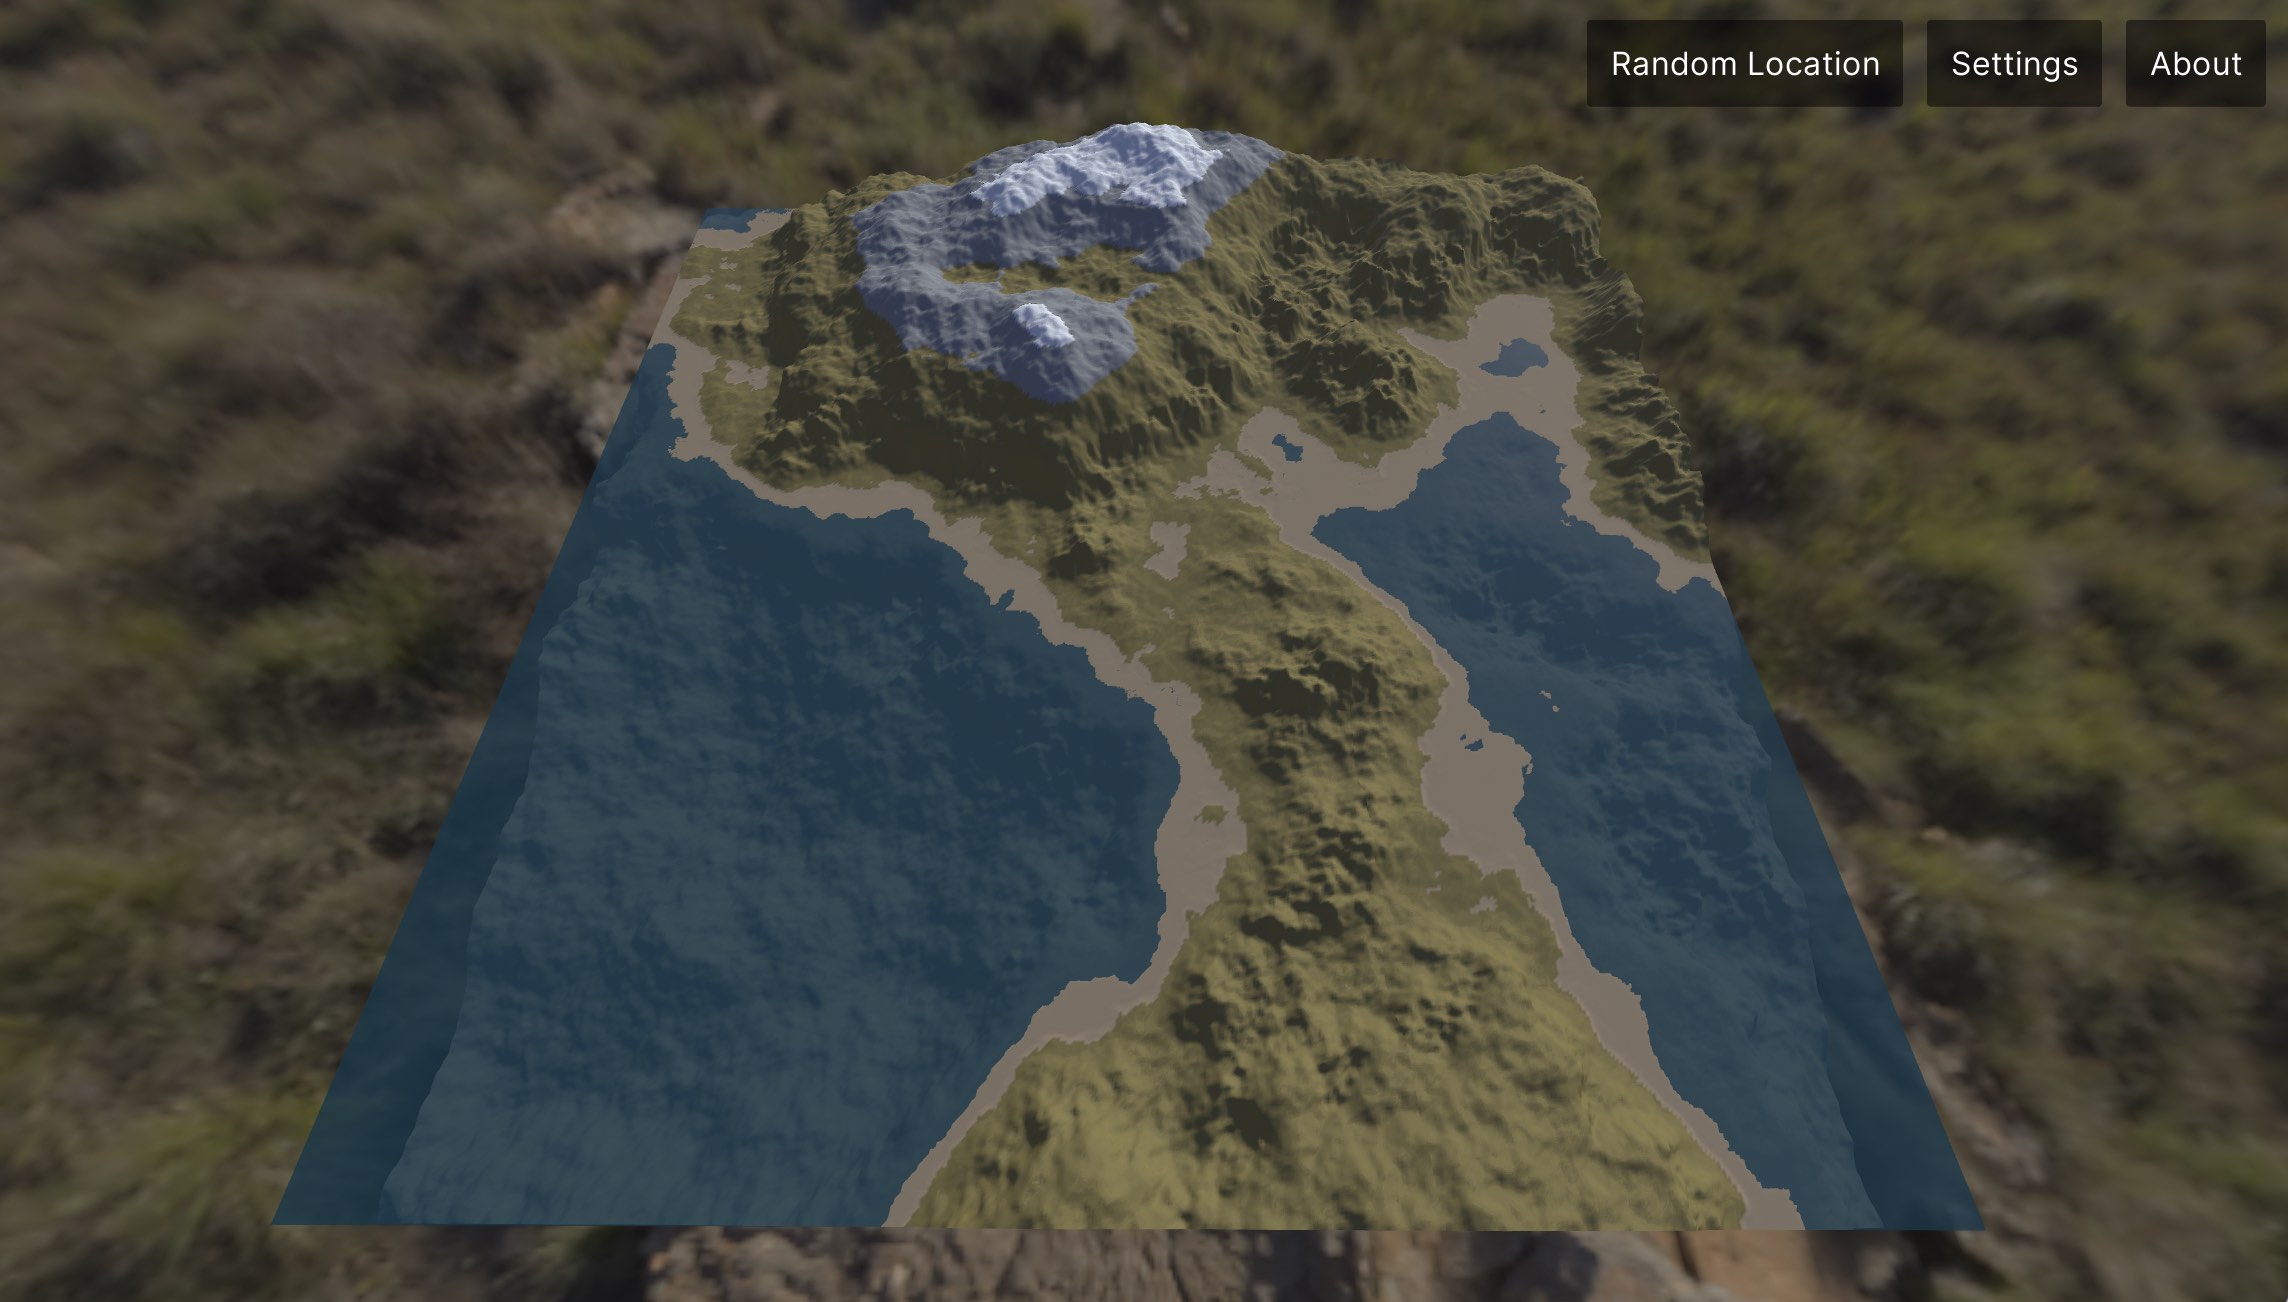 A screenshot looking down on mountainous terrain and an ocean